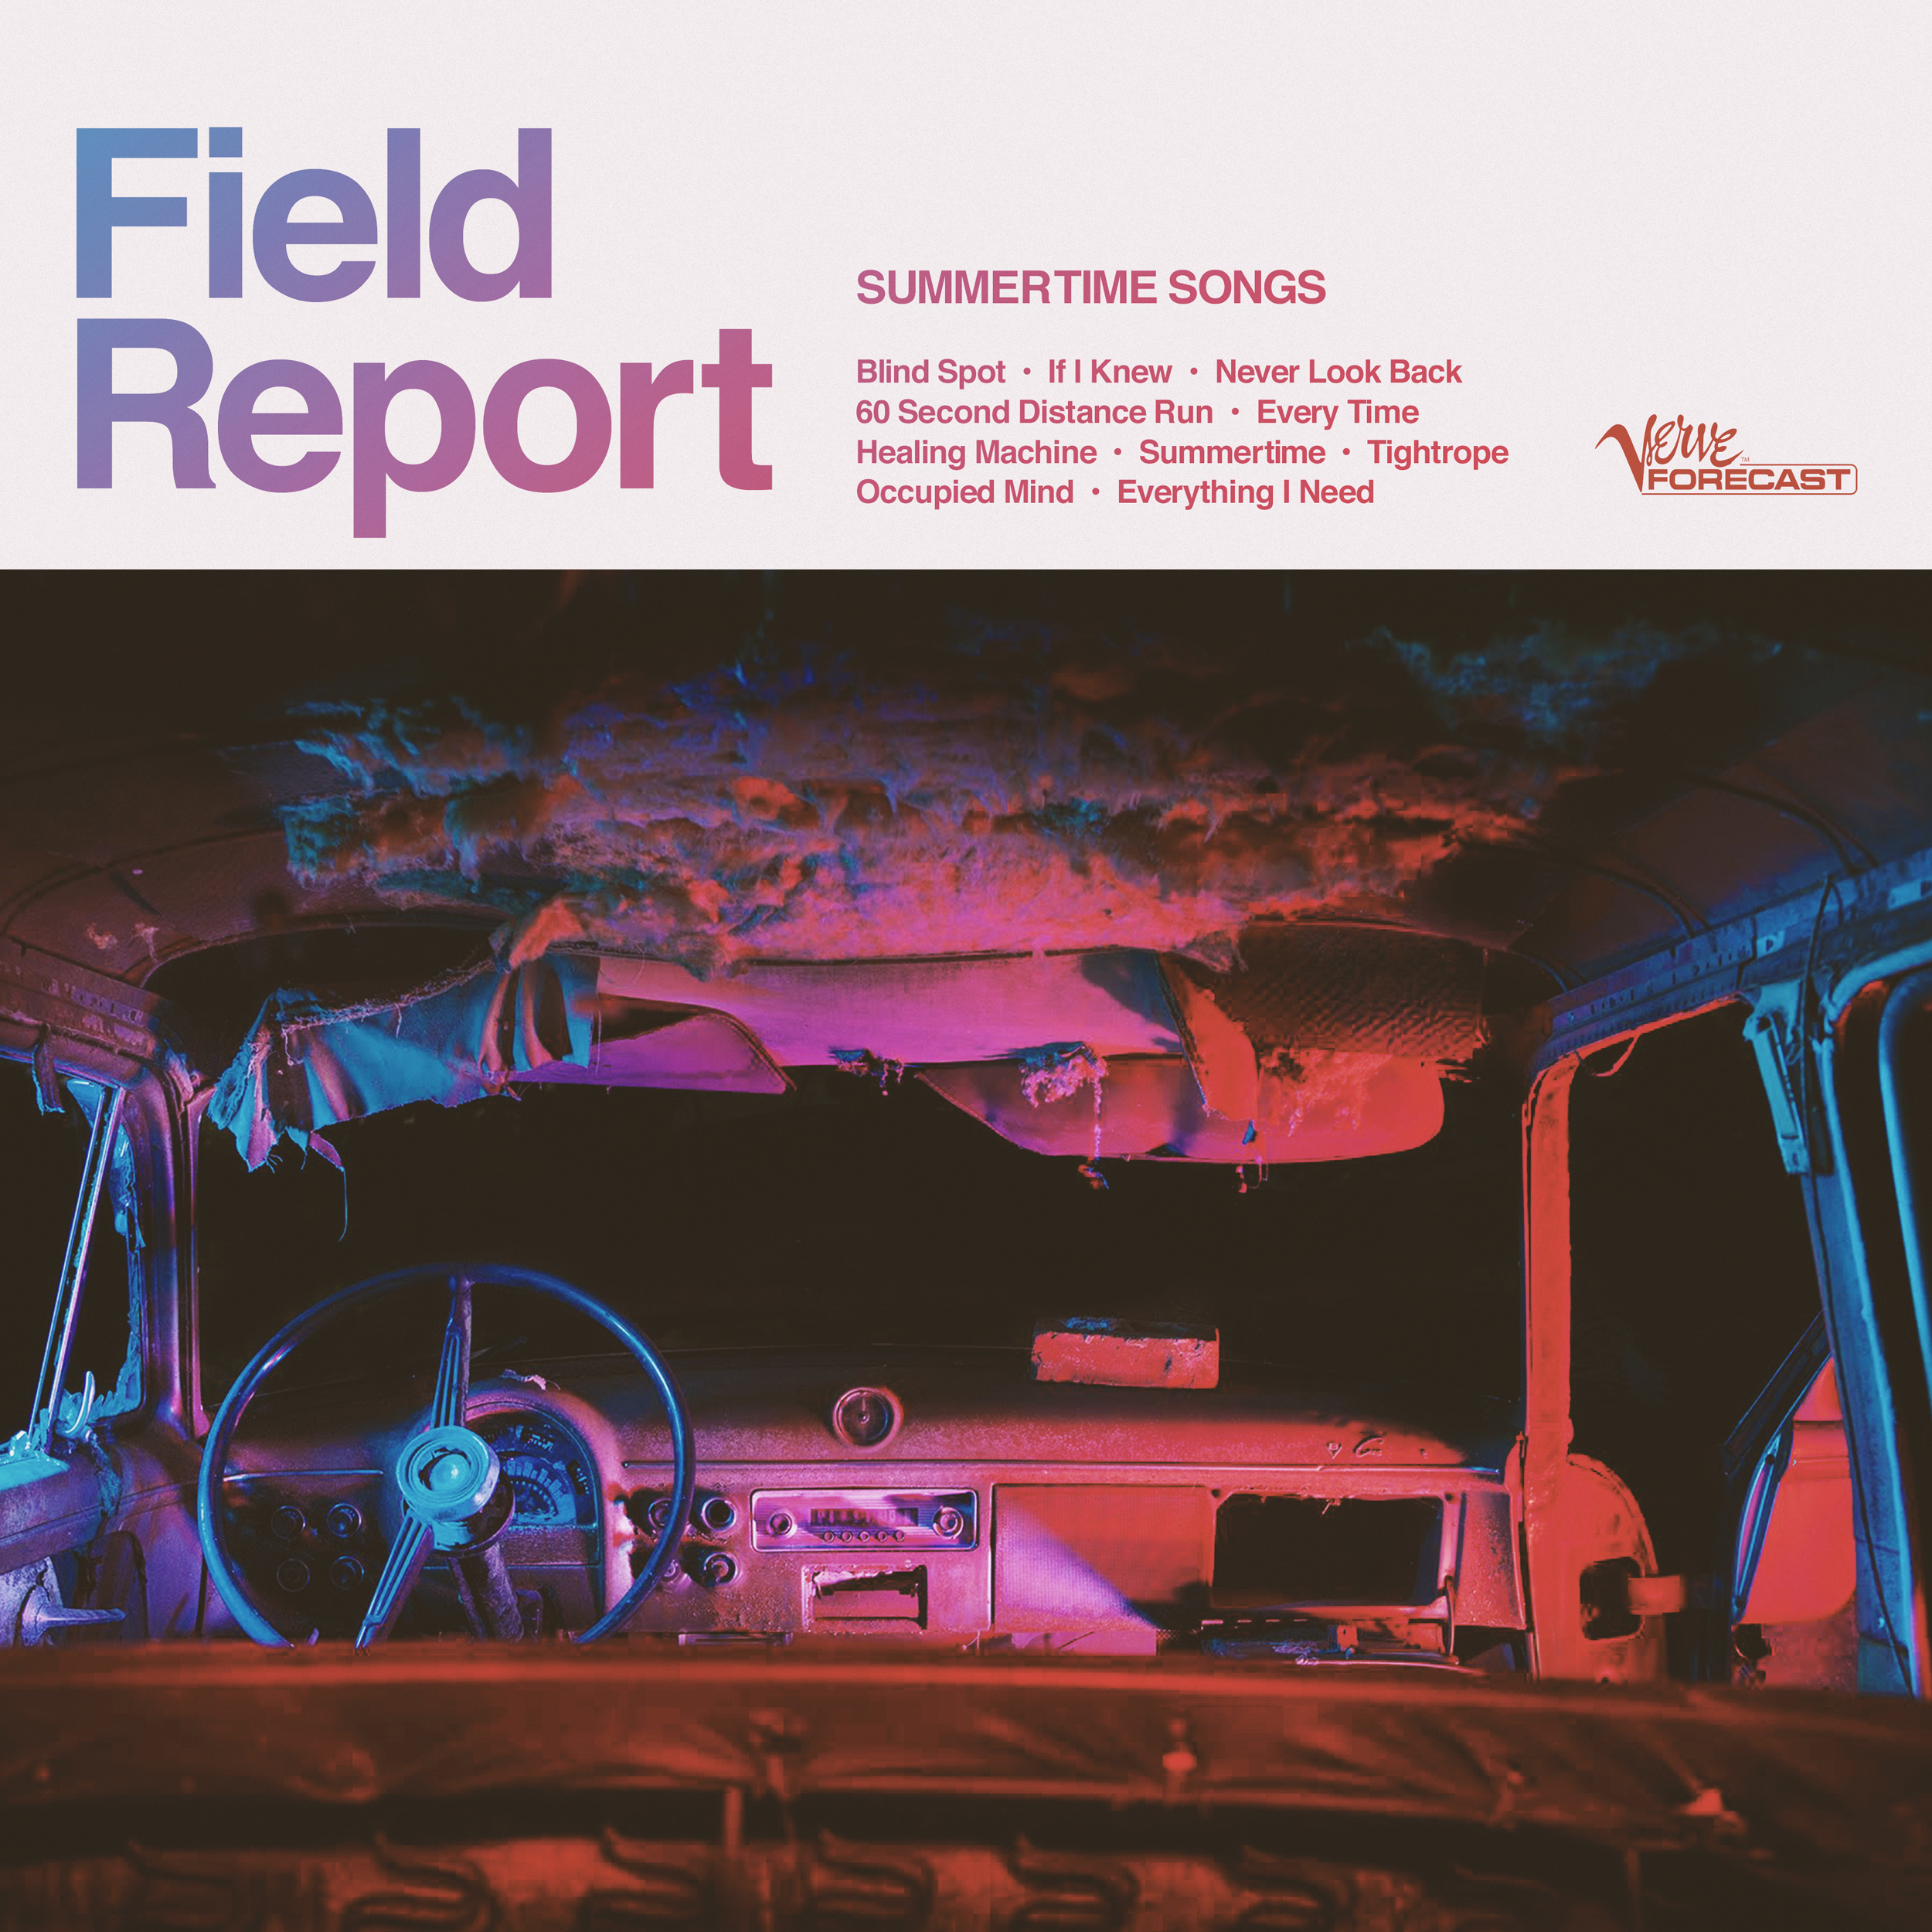 Field Report Summertime Songs album art